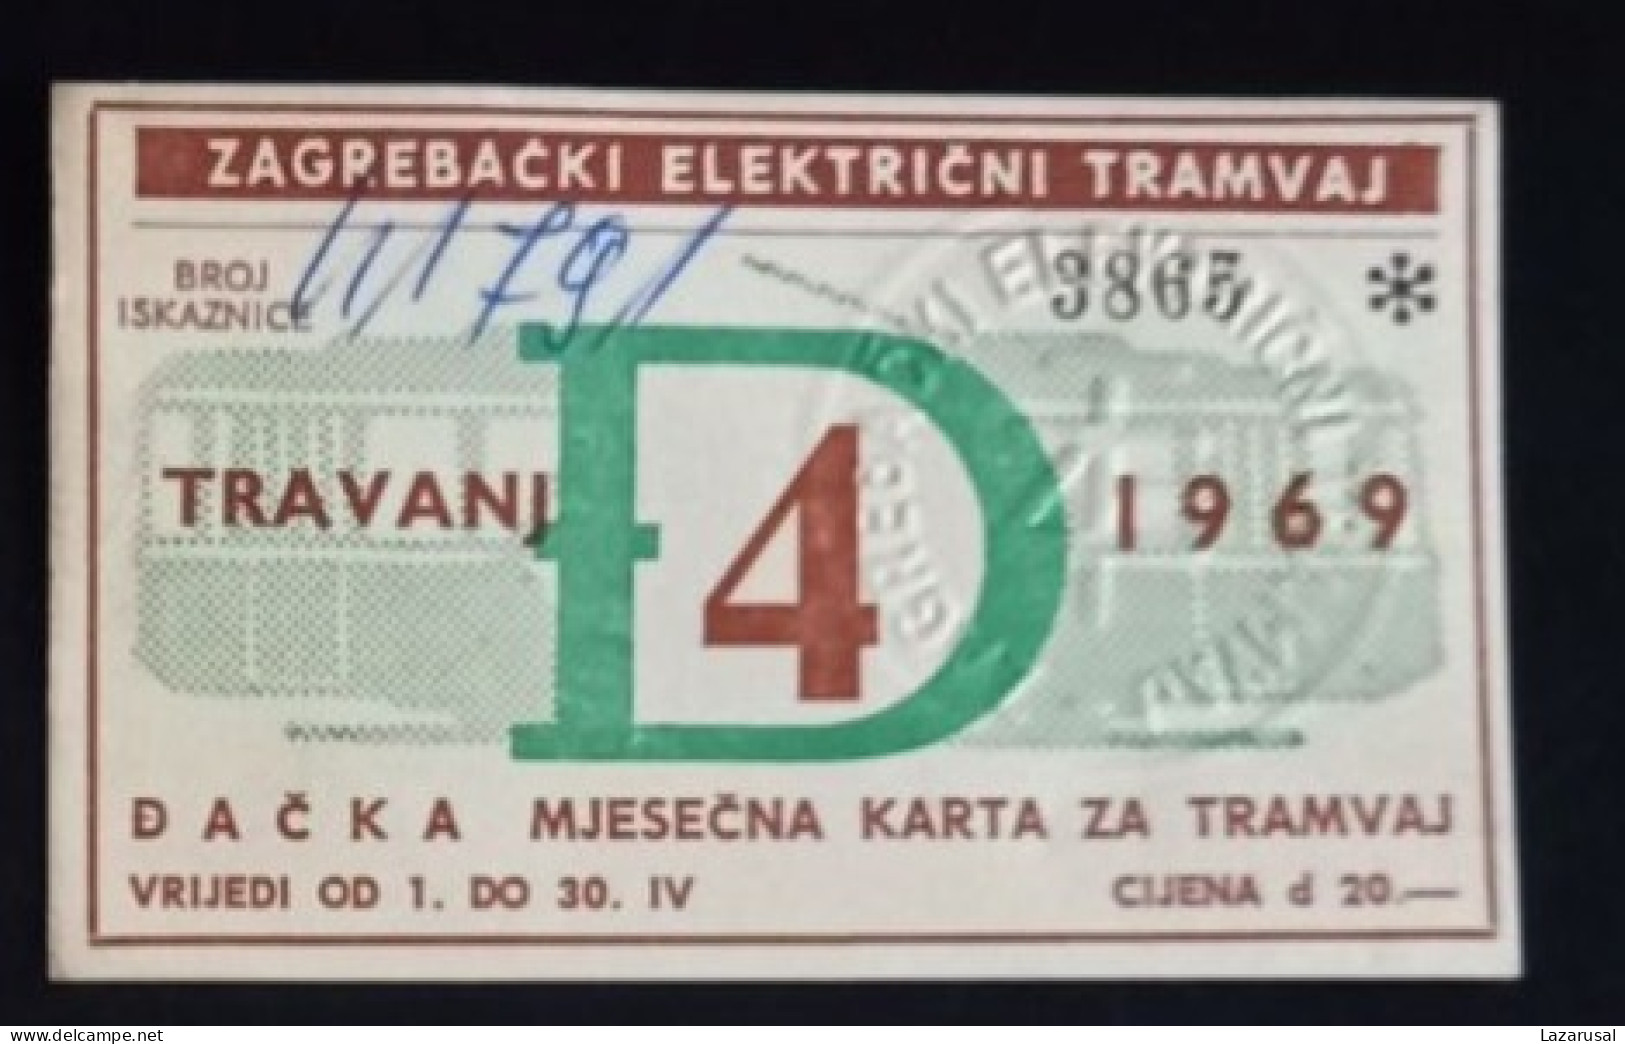 #21   1969    ZAGREB CROATIA YUGOSLAVIA MONTHLY TRAM TRAMWAY TICKET - Europe